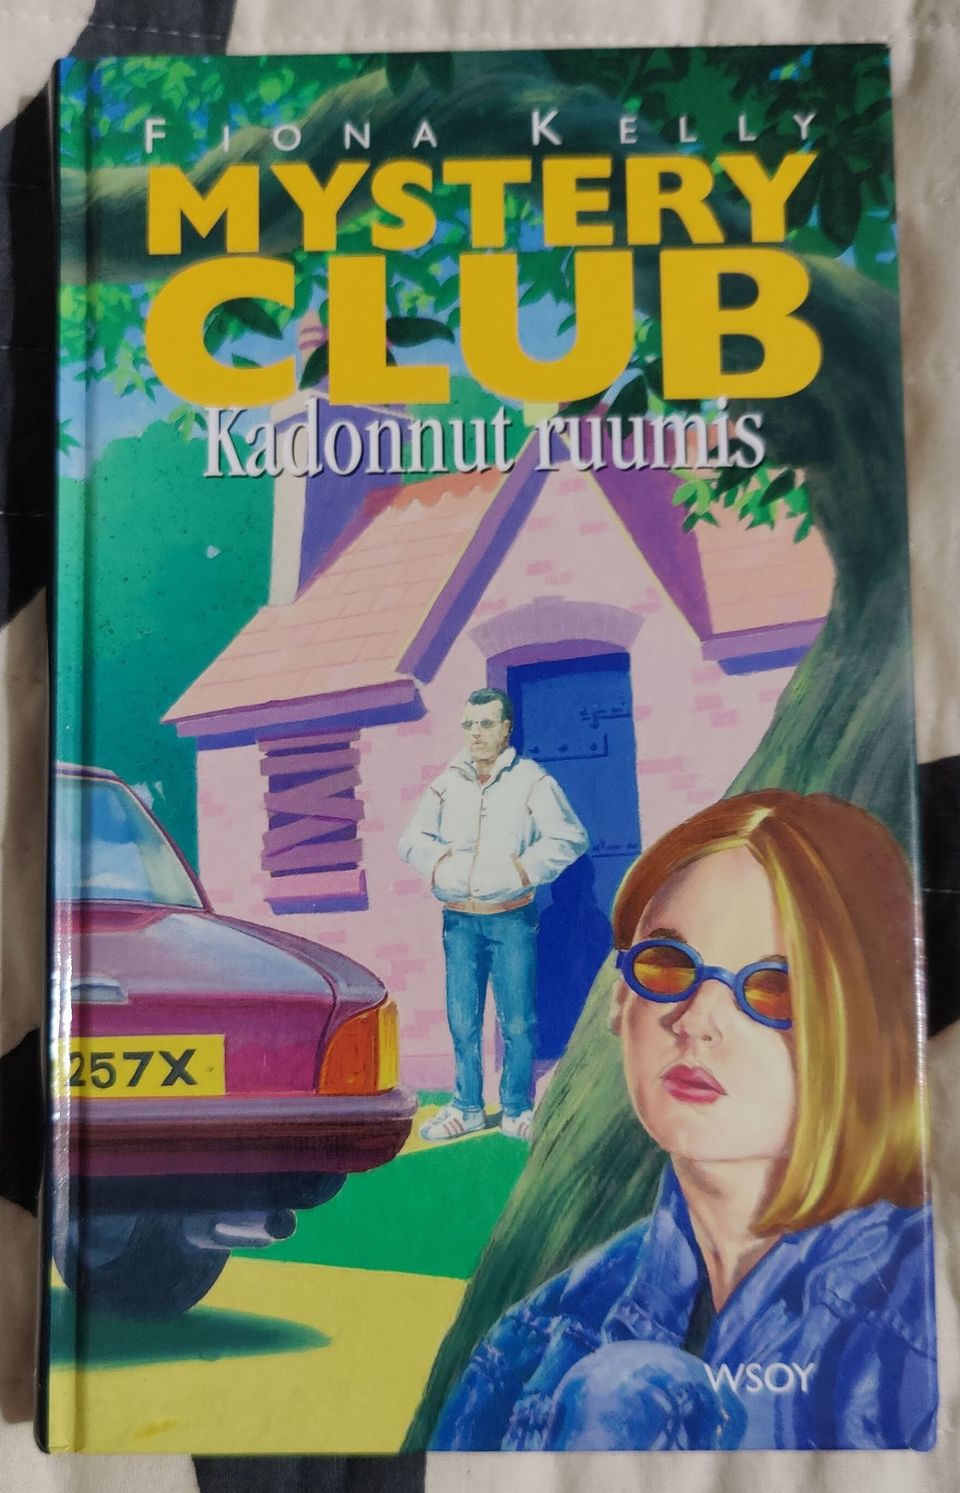 Mystery club Kadonnut ruumis